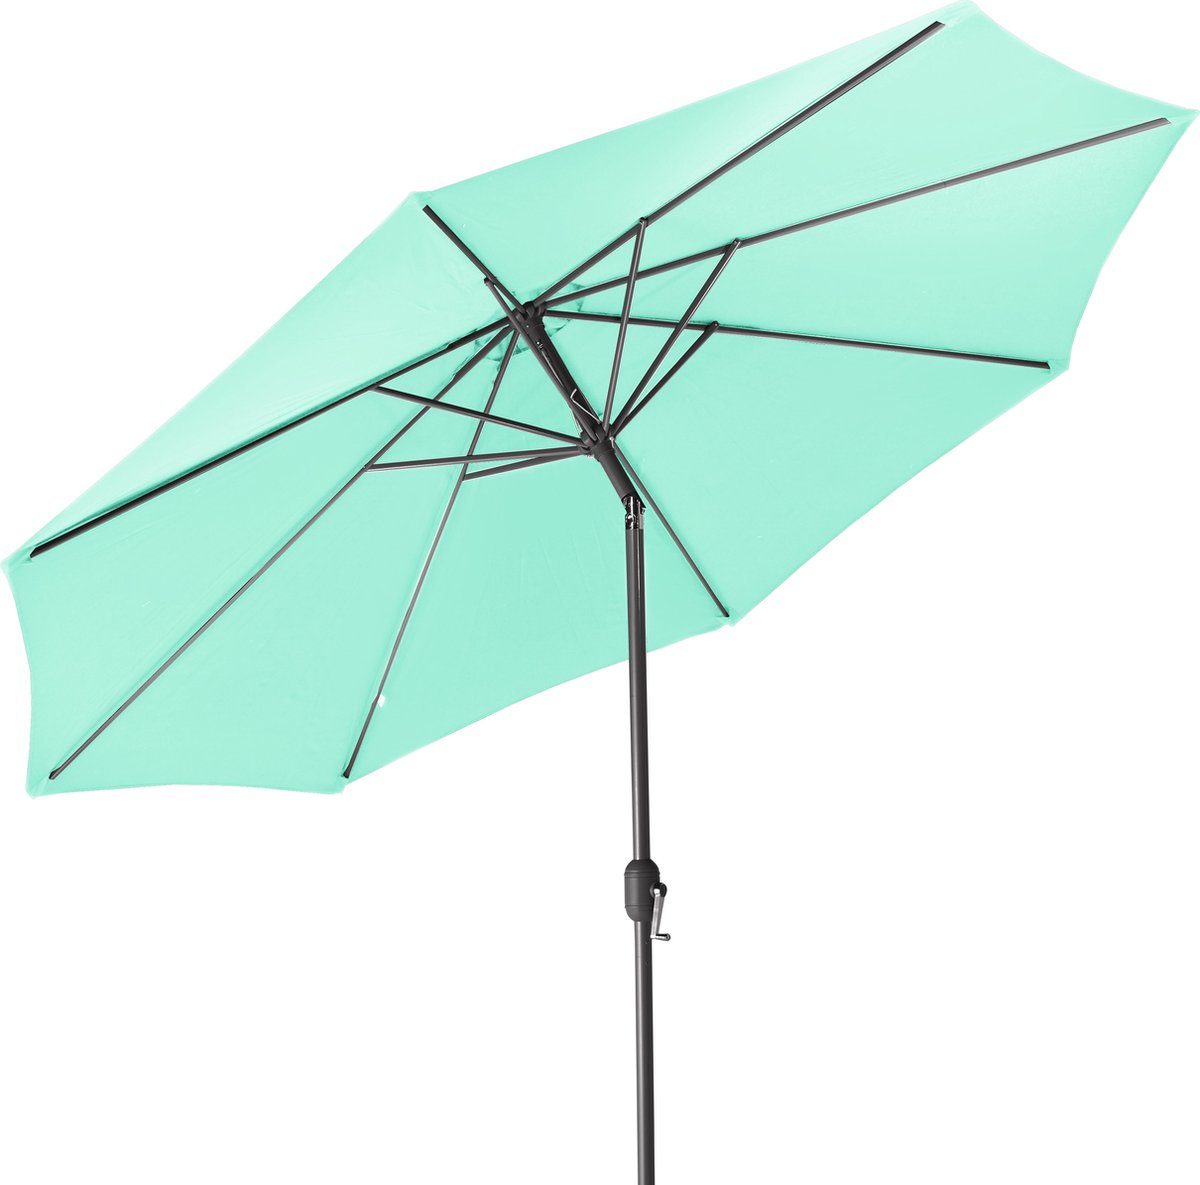 Paraplu - UV 50+ Bescherming - Weerbestendig - Aluminium Frame - Waterafstotend - 180g/m2 - Polyester - Lichtgroen - 270 cm